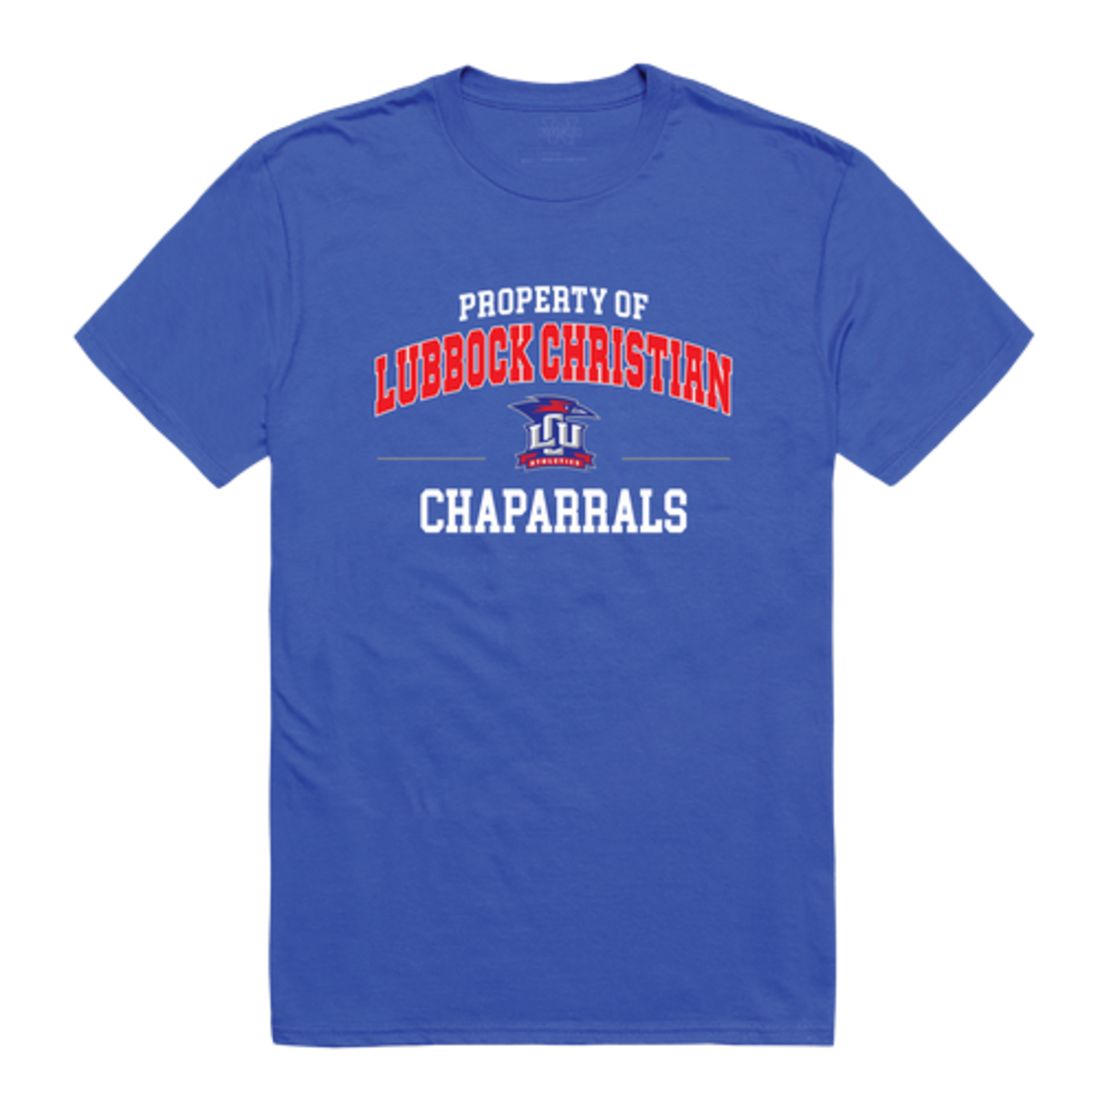 Lubbock Christian University Chaparral Property T-Shirt Tee